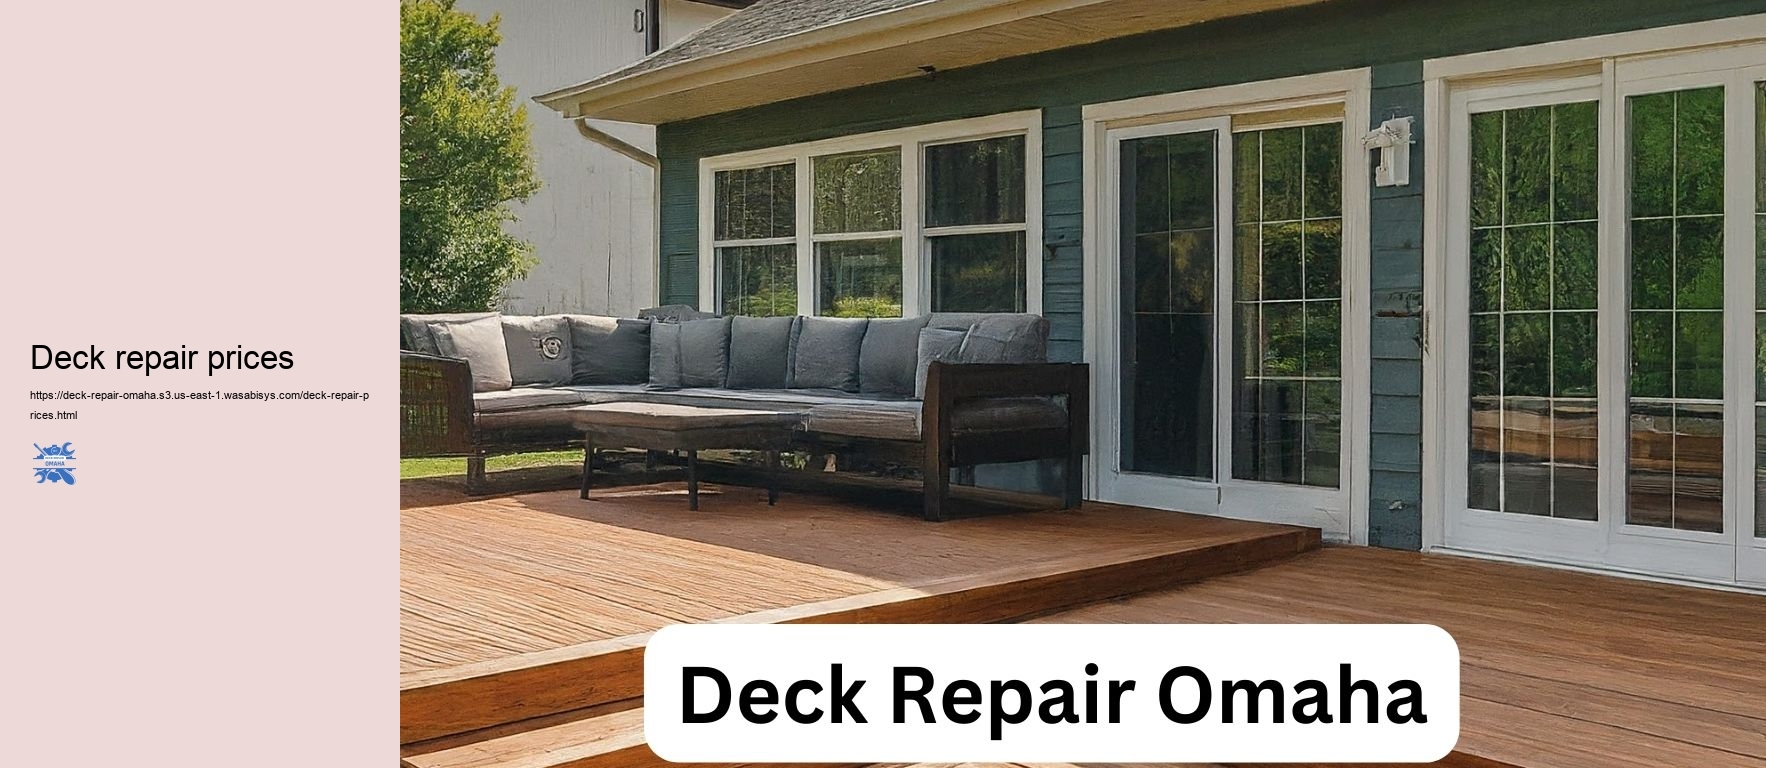 Deck repair prices